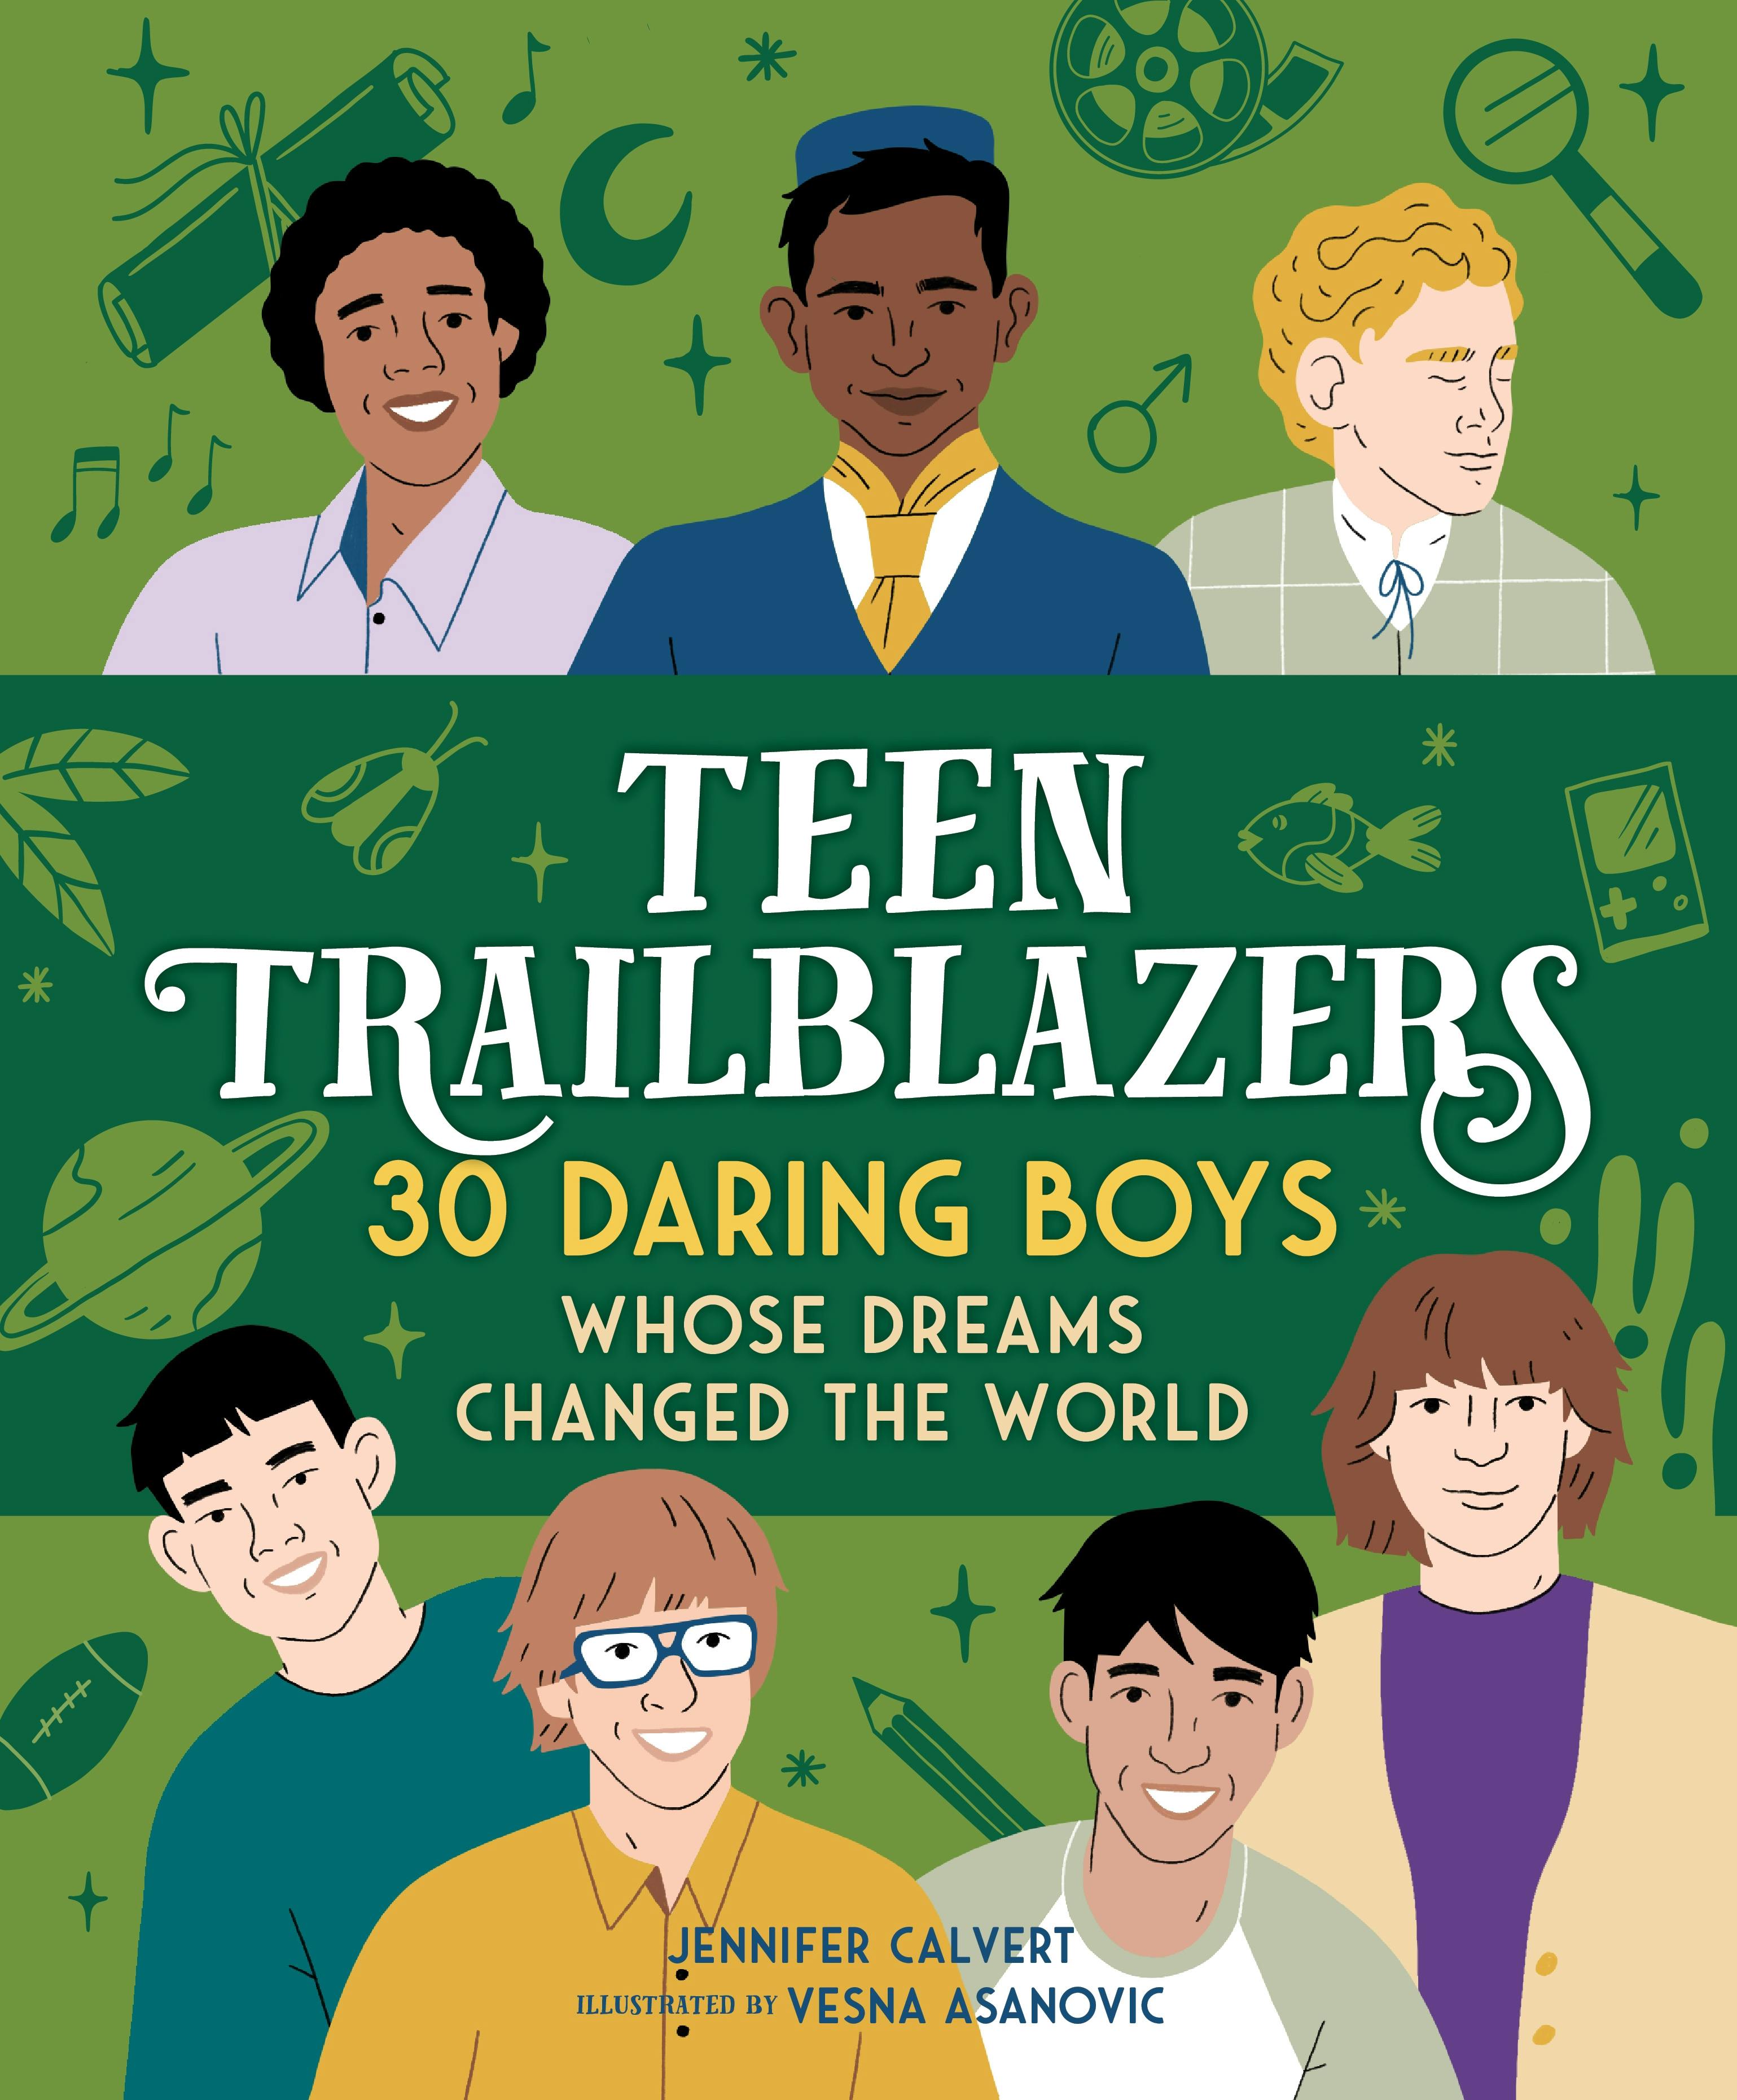 Teen Trailblazers